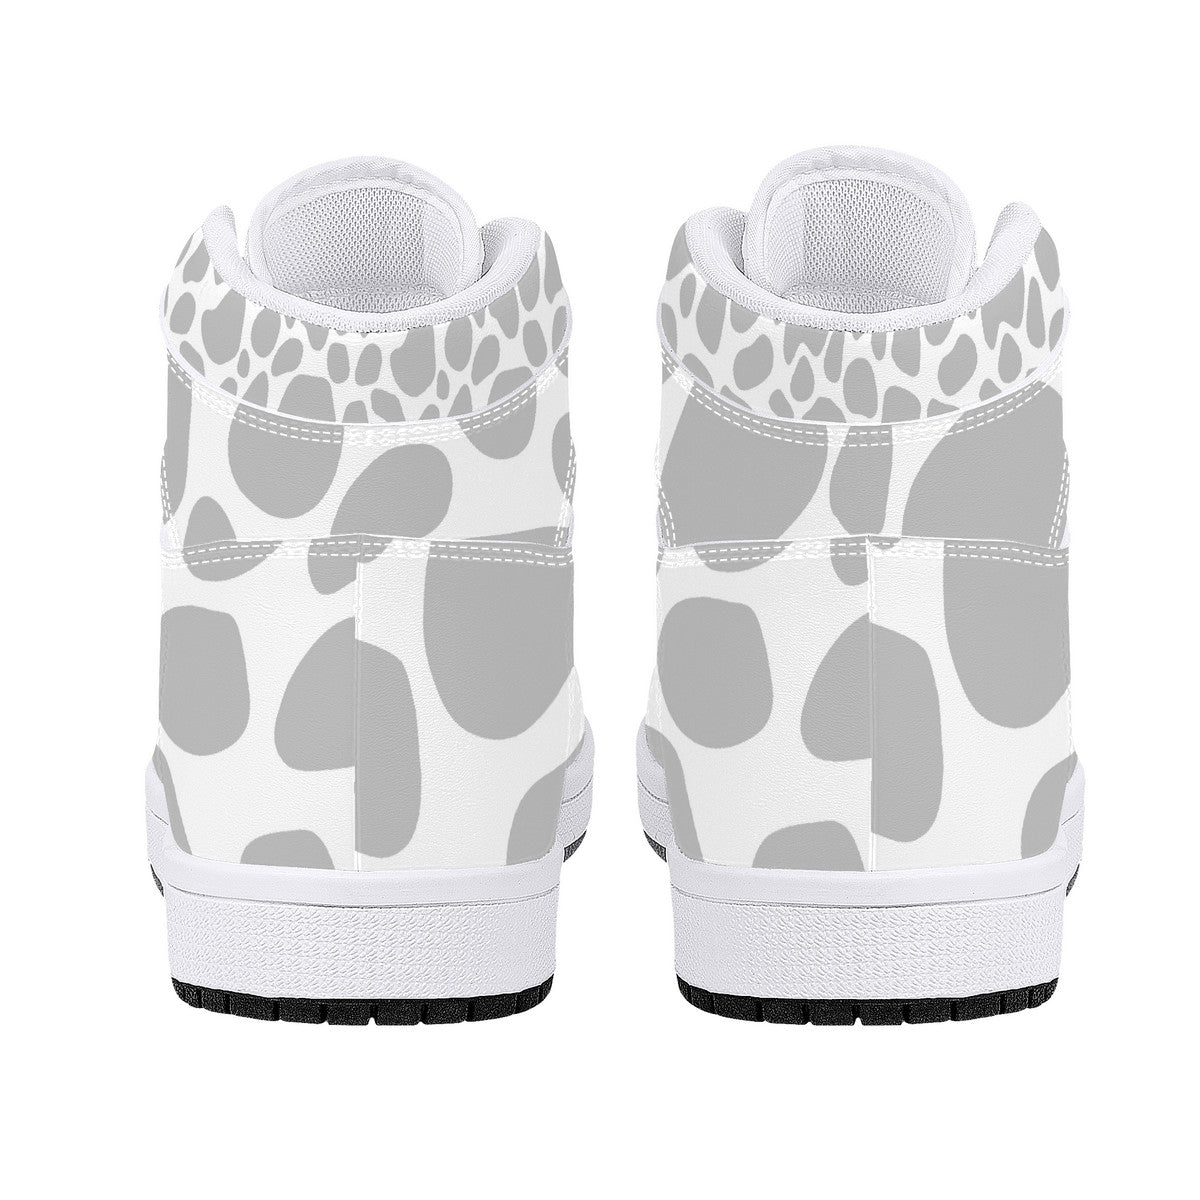 "Nix Giraffe" High-Top Synthetic Leather Sneakers